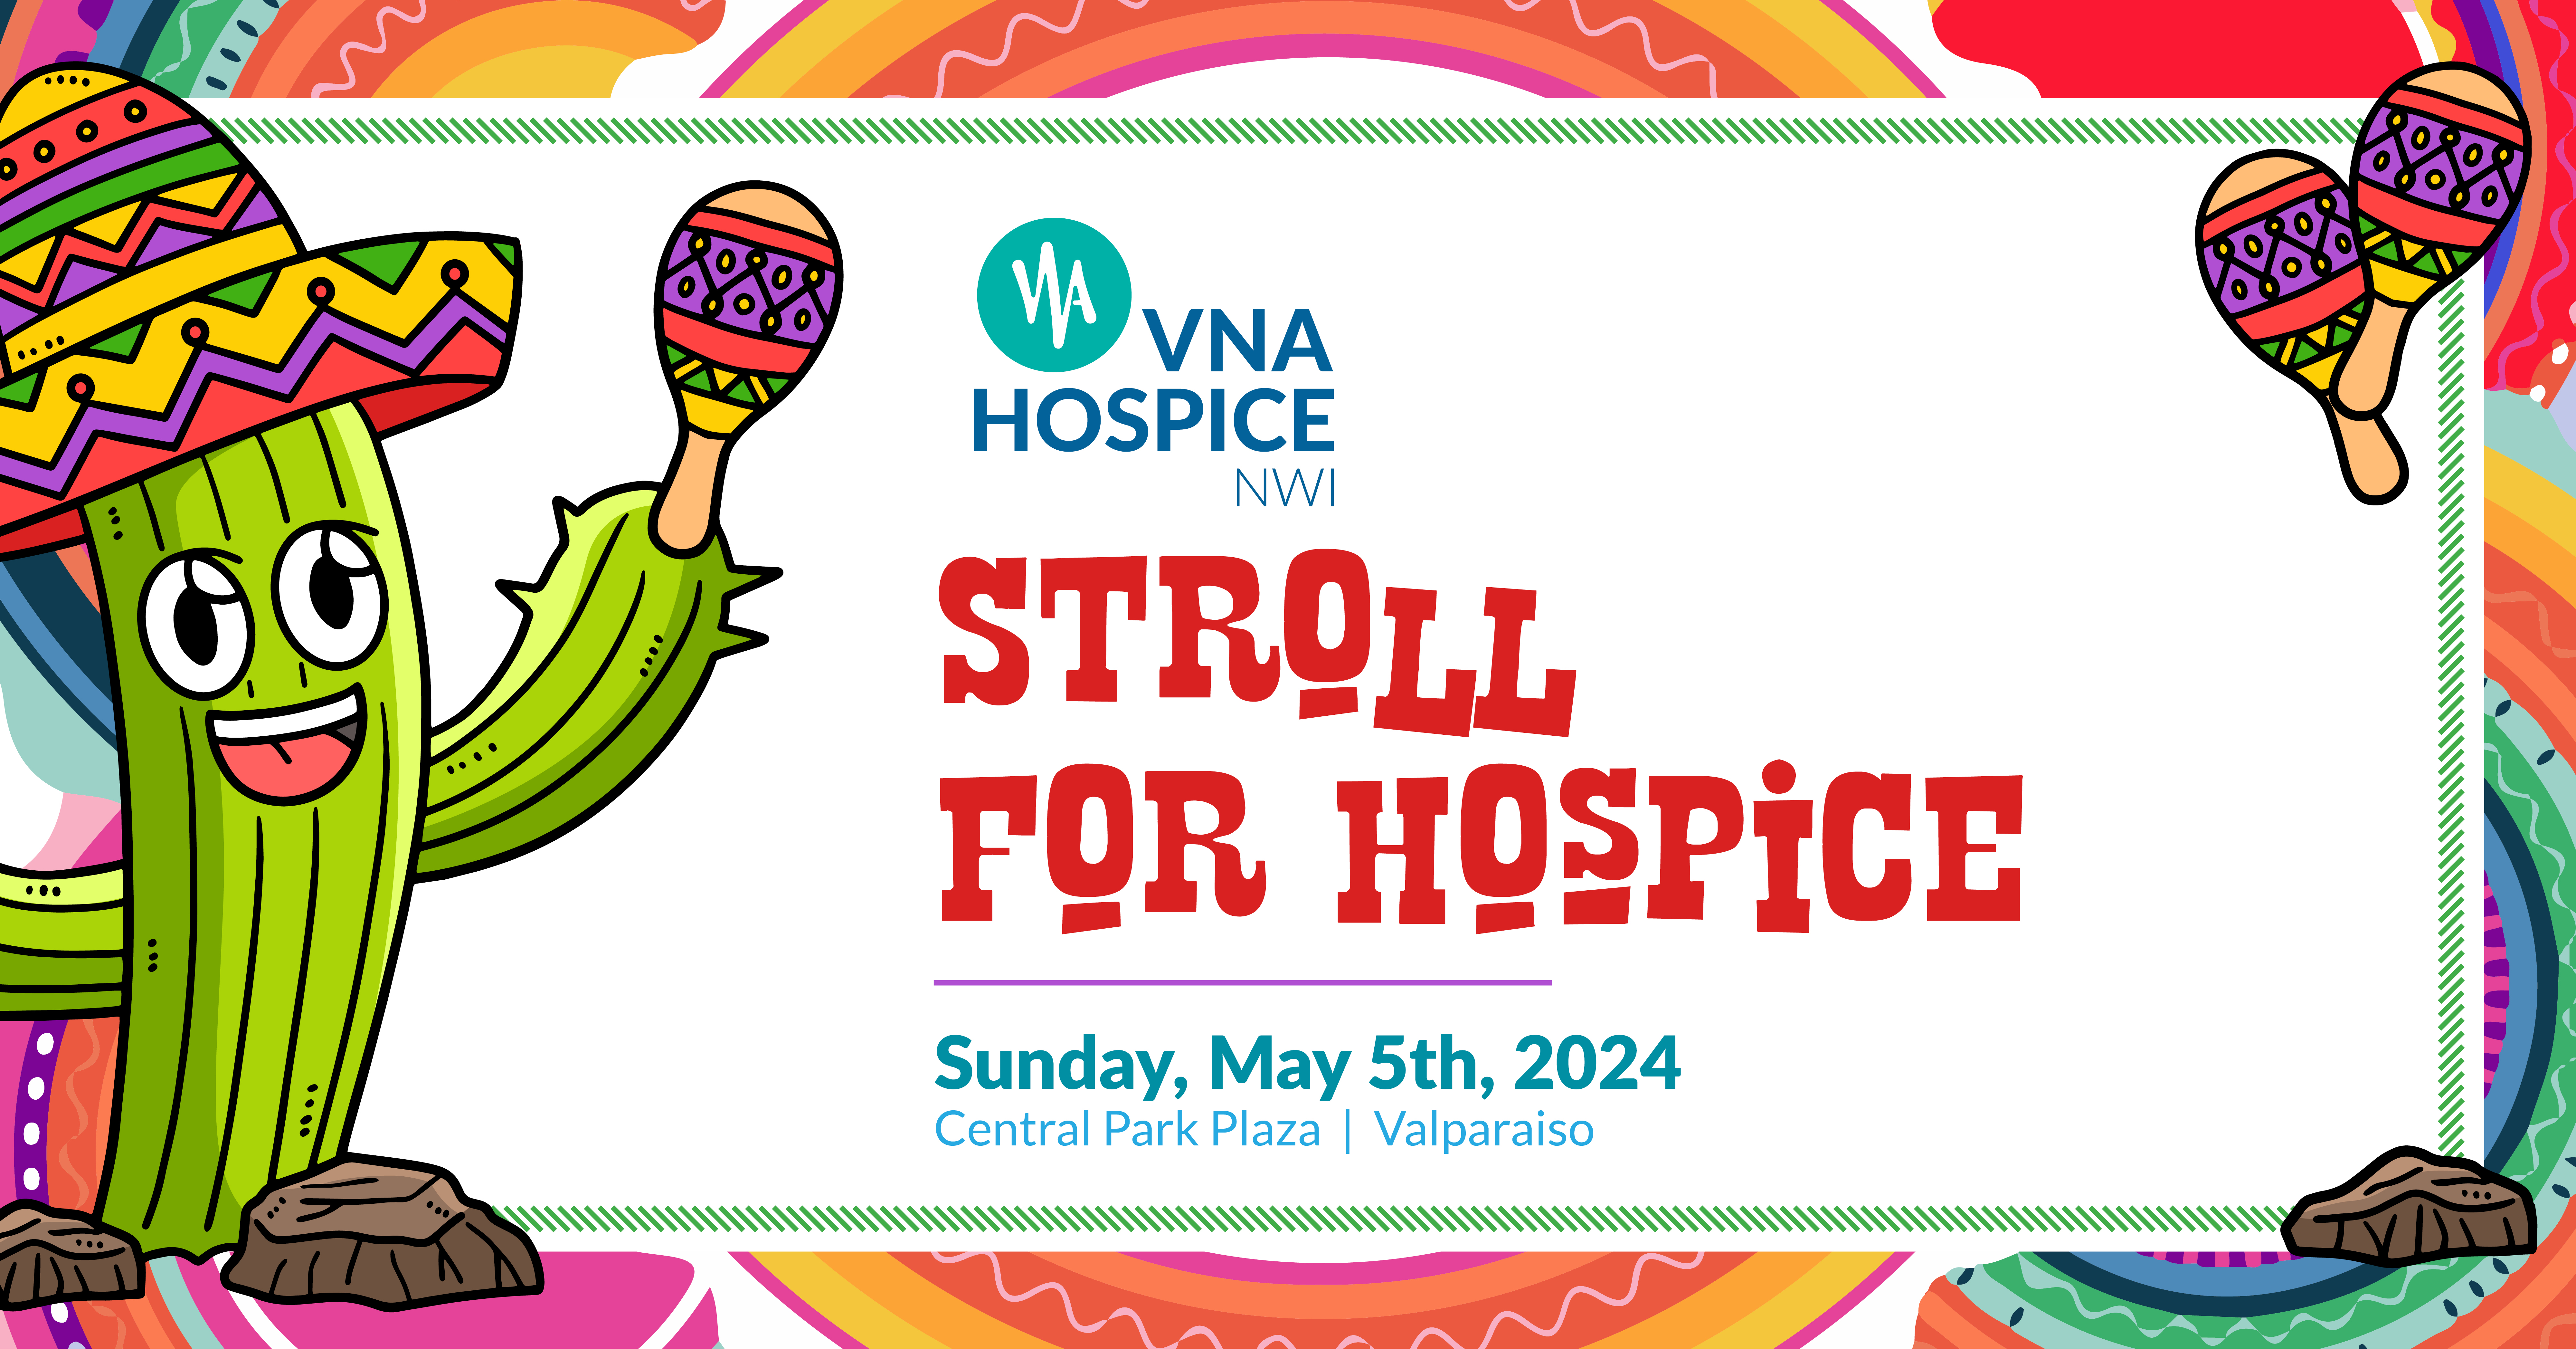 VNA Stroll for Hospice May 5, 2024